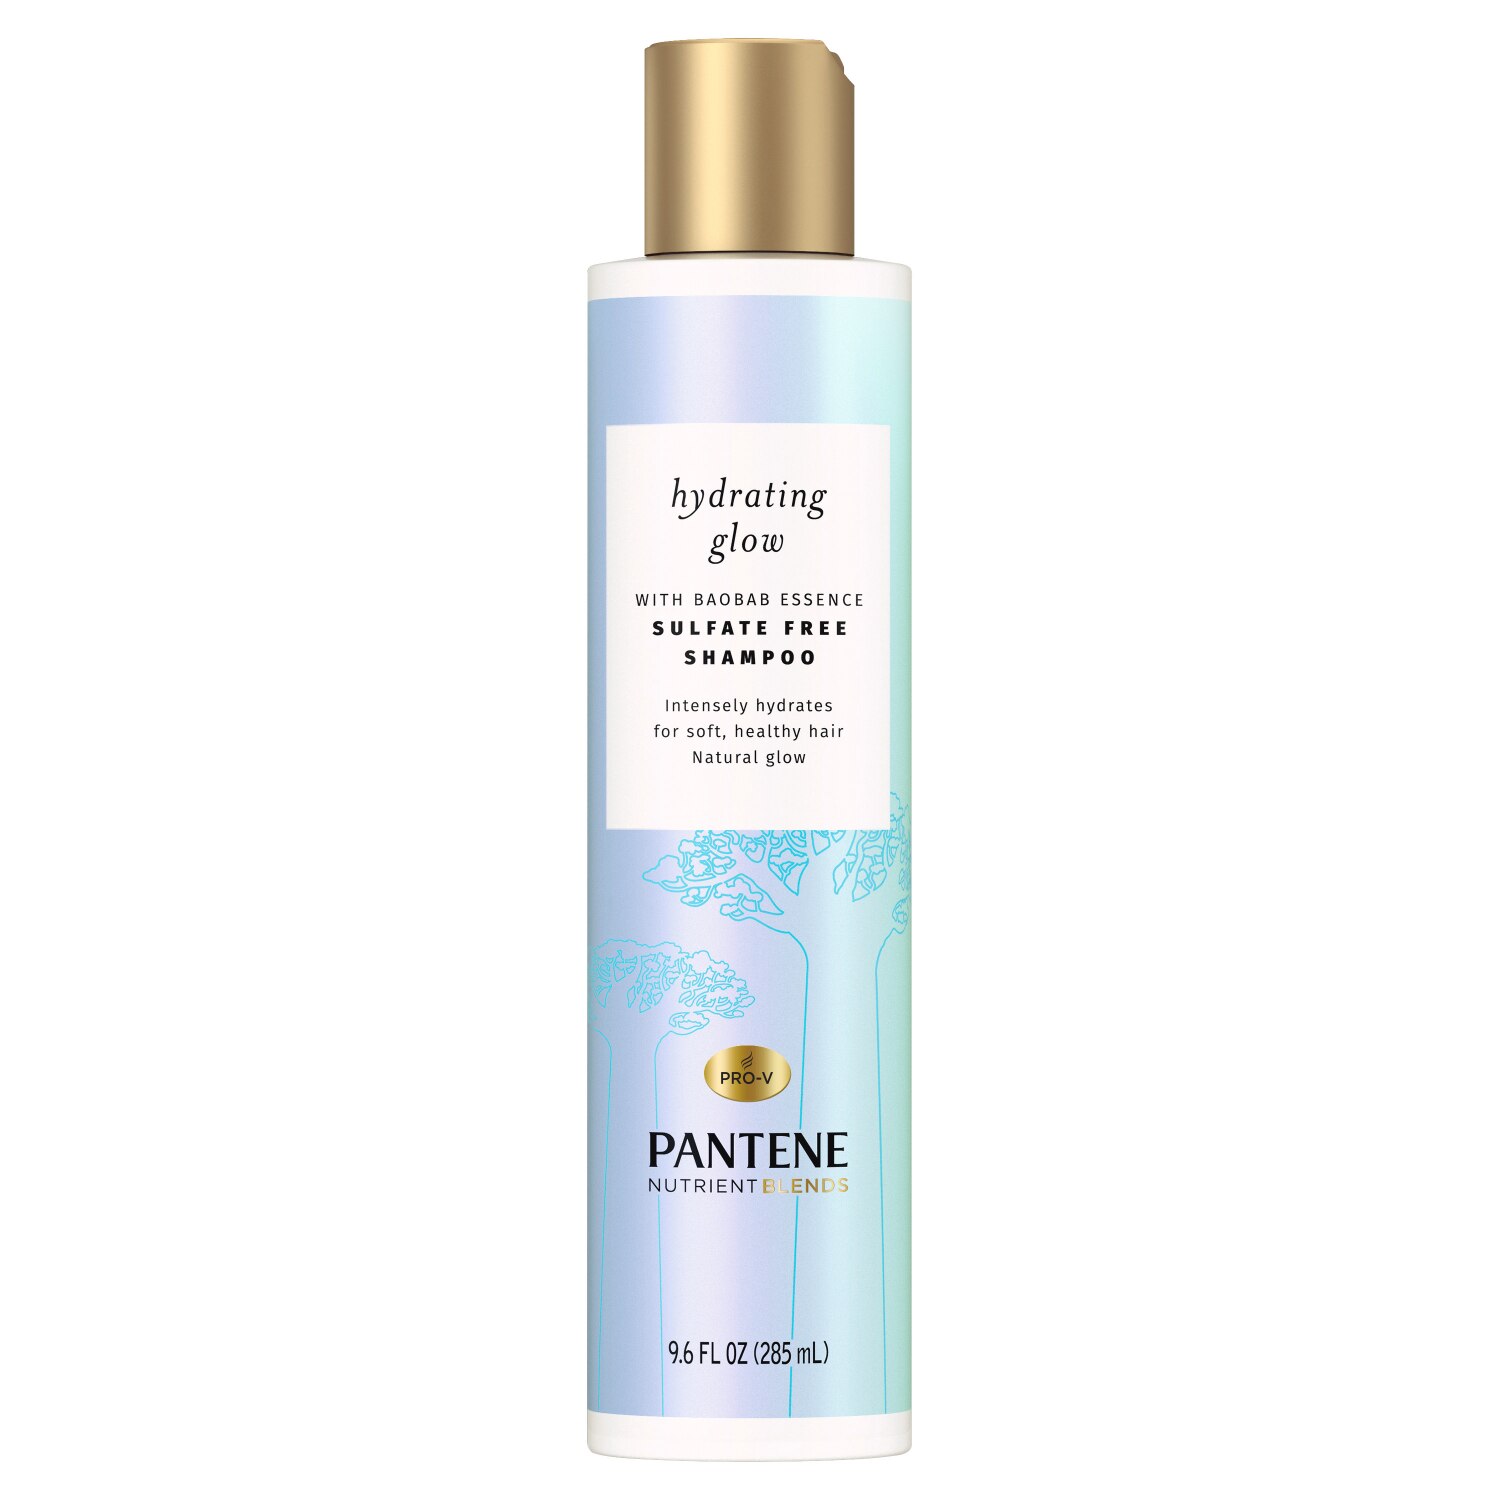 Pantene Nutrient Blends Hydrating Glow Shampoo with Baobab Essence, 9.6 OZ